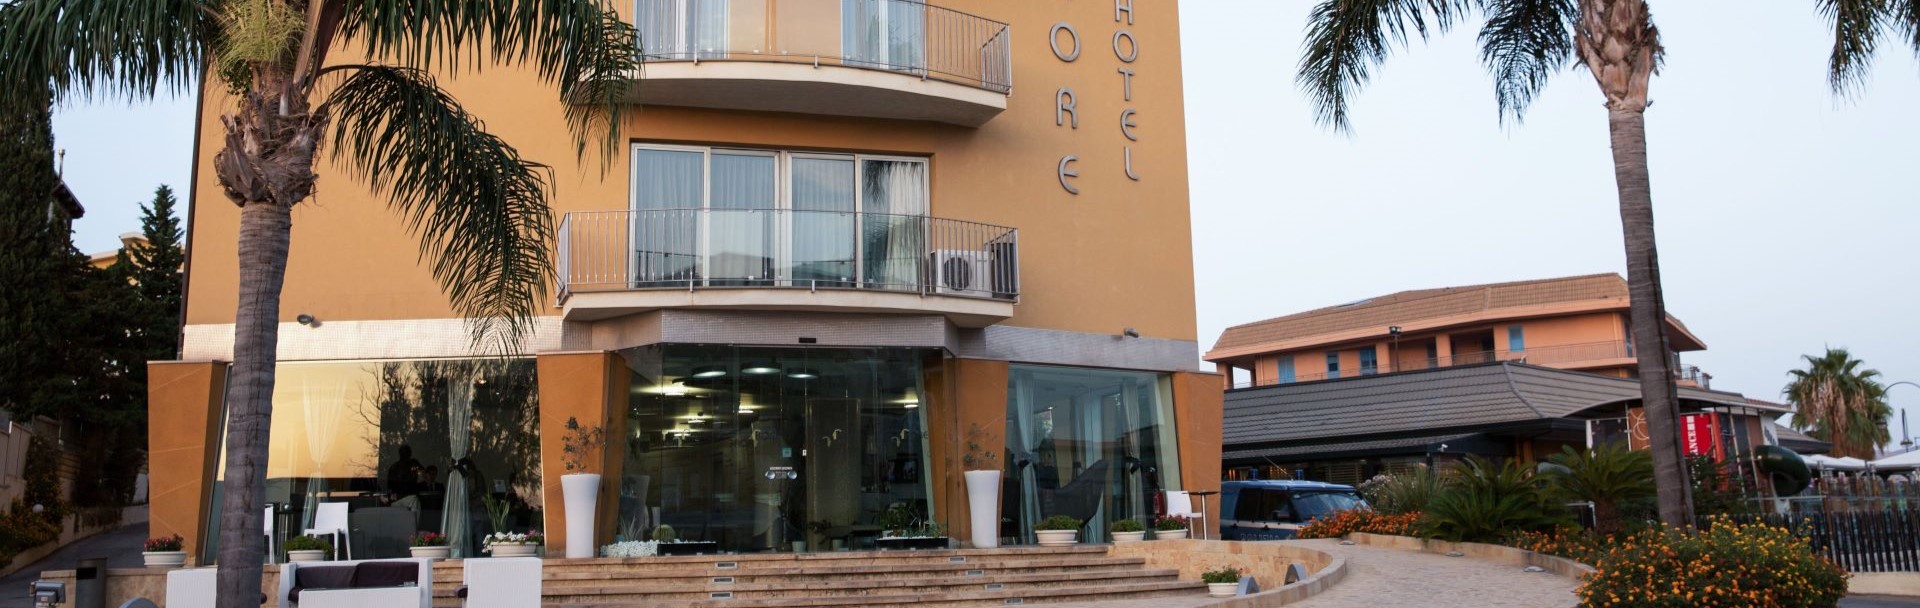 Hotel Kore, Agrigento